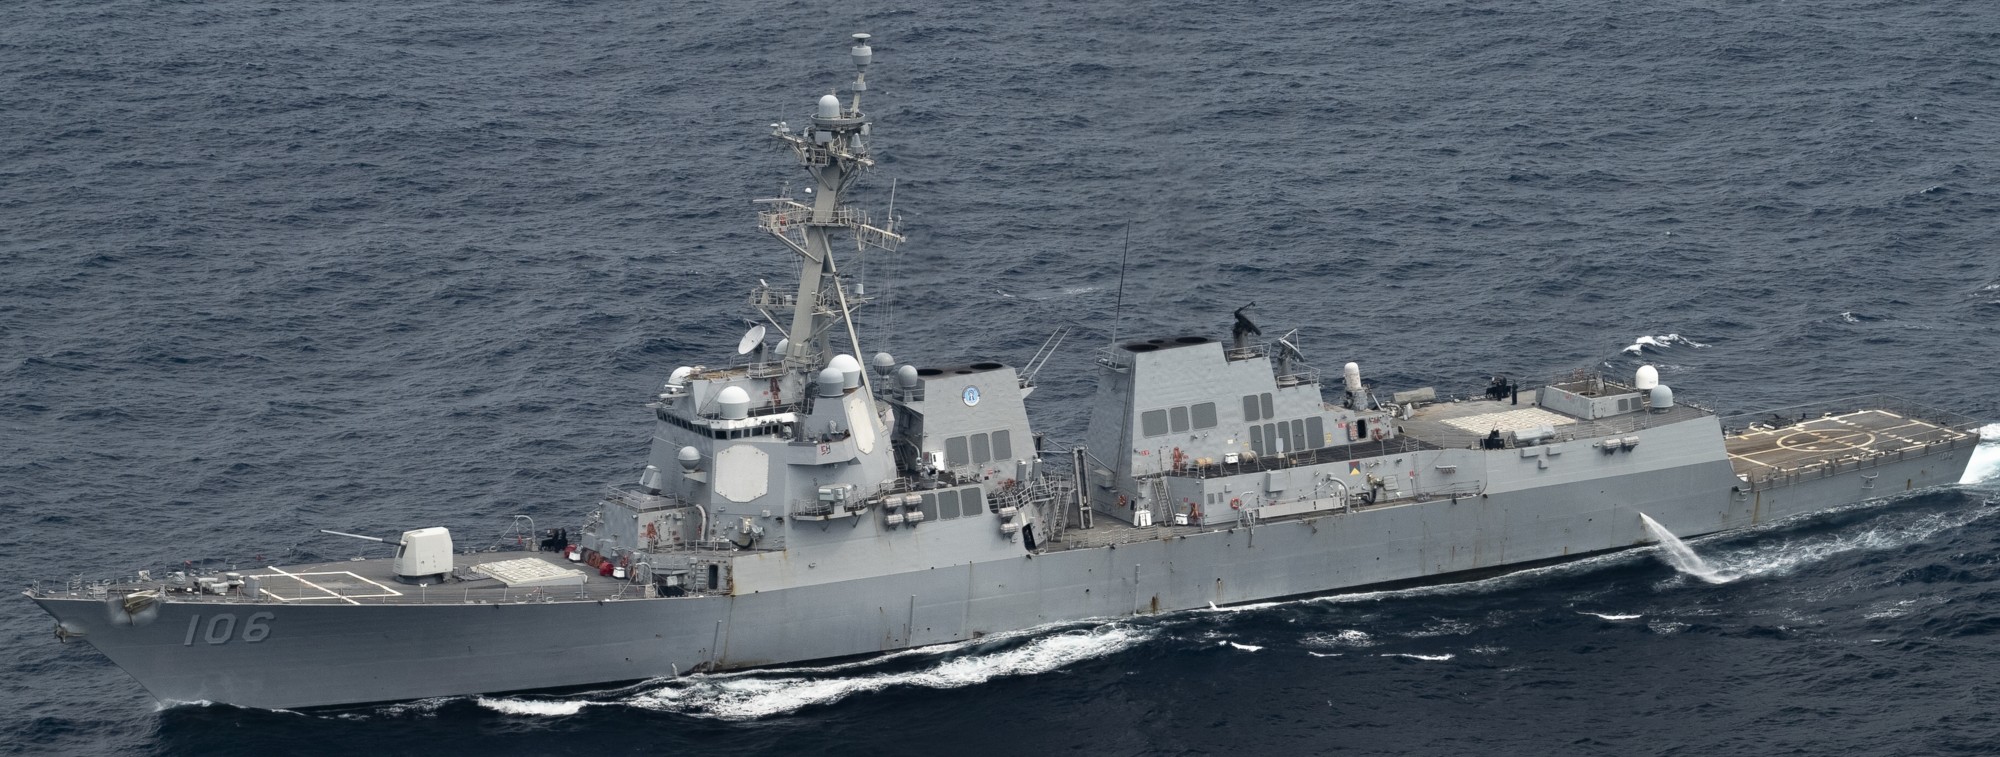 ddg-106 uss stockdale arleigh burke class guided missile destroyer aegis us navy 144